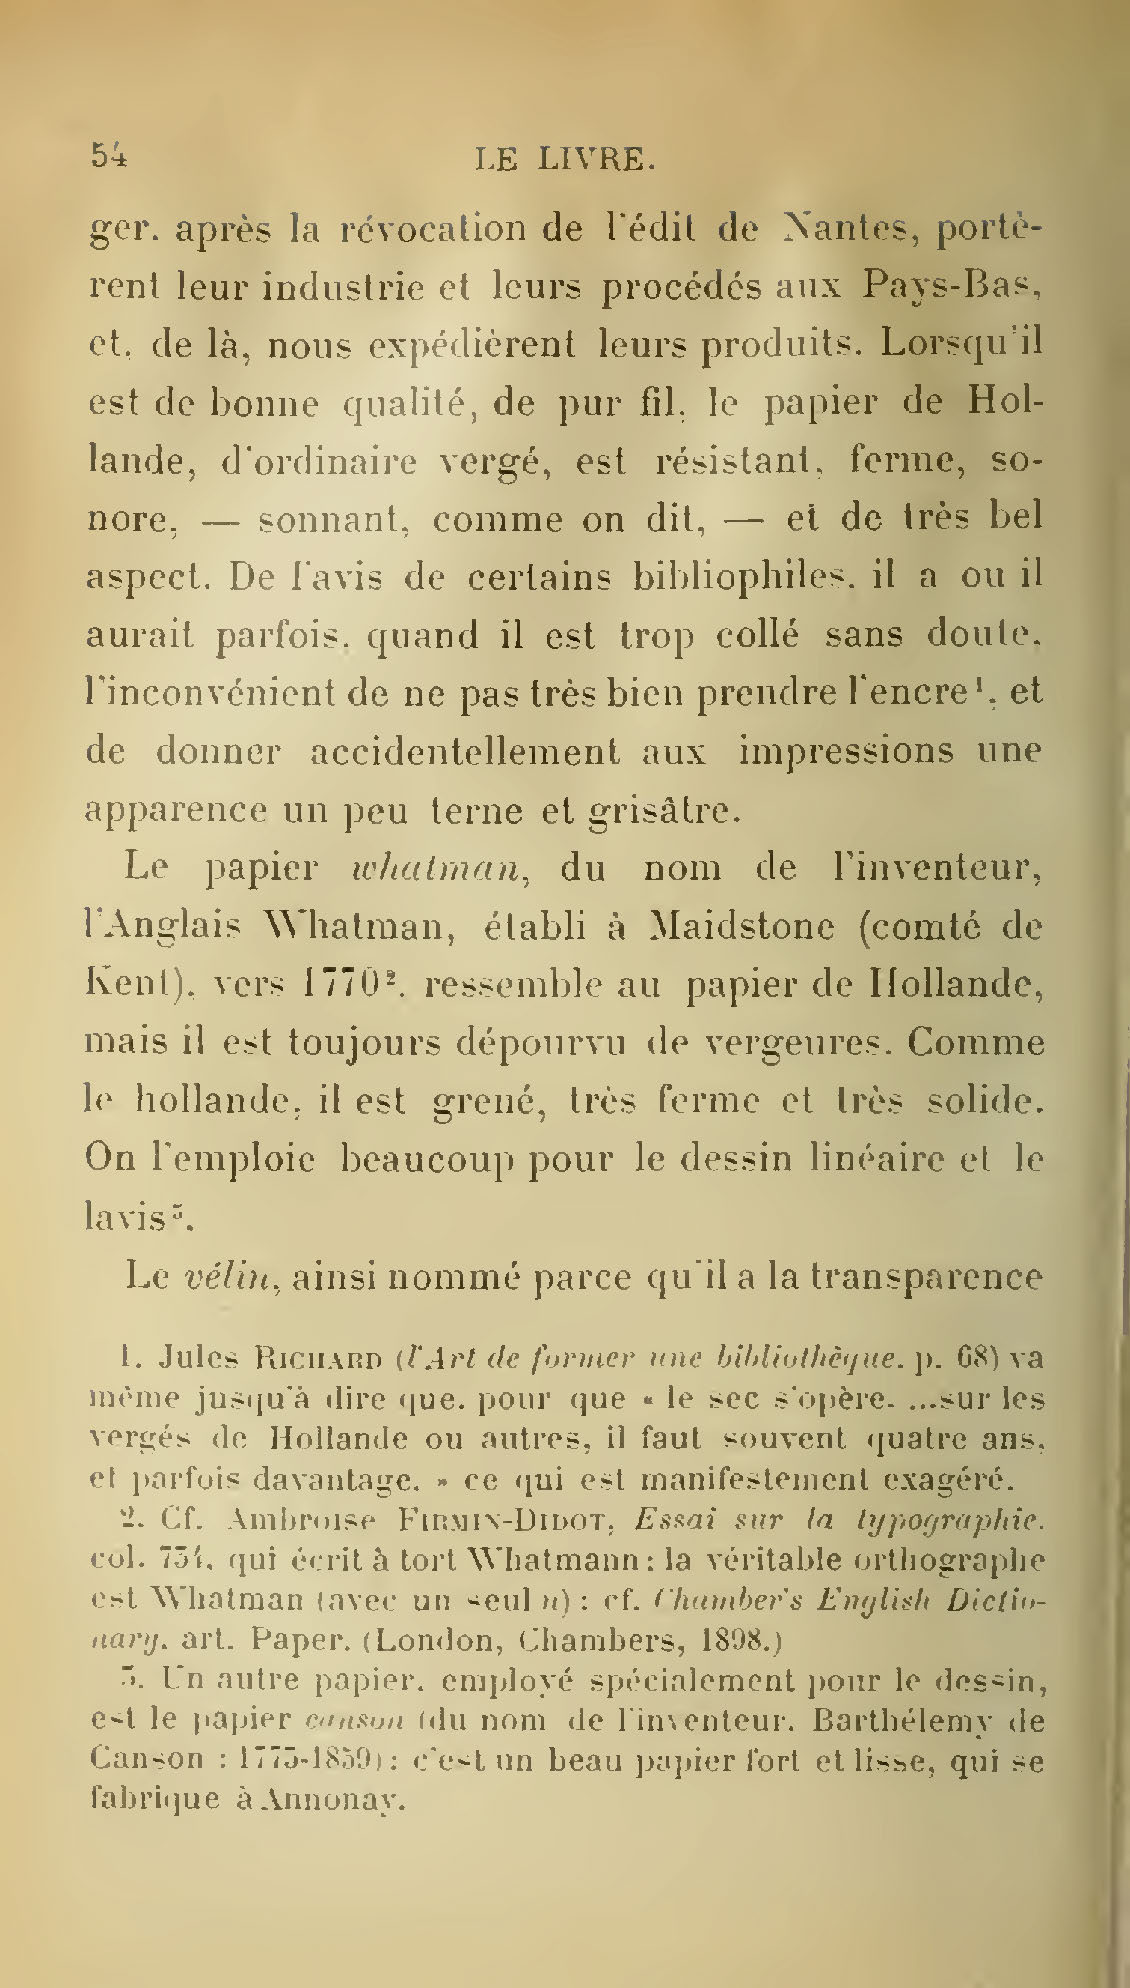 Albert Cim, Le Livre, t. III, p. 54.